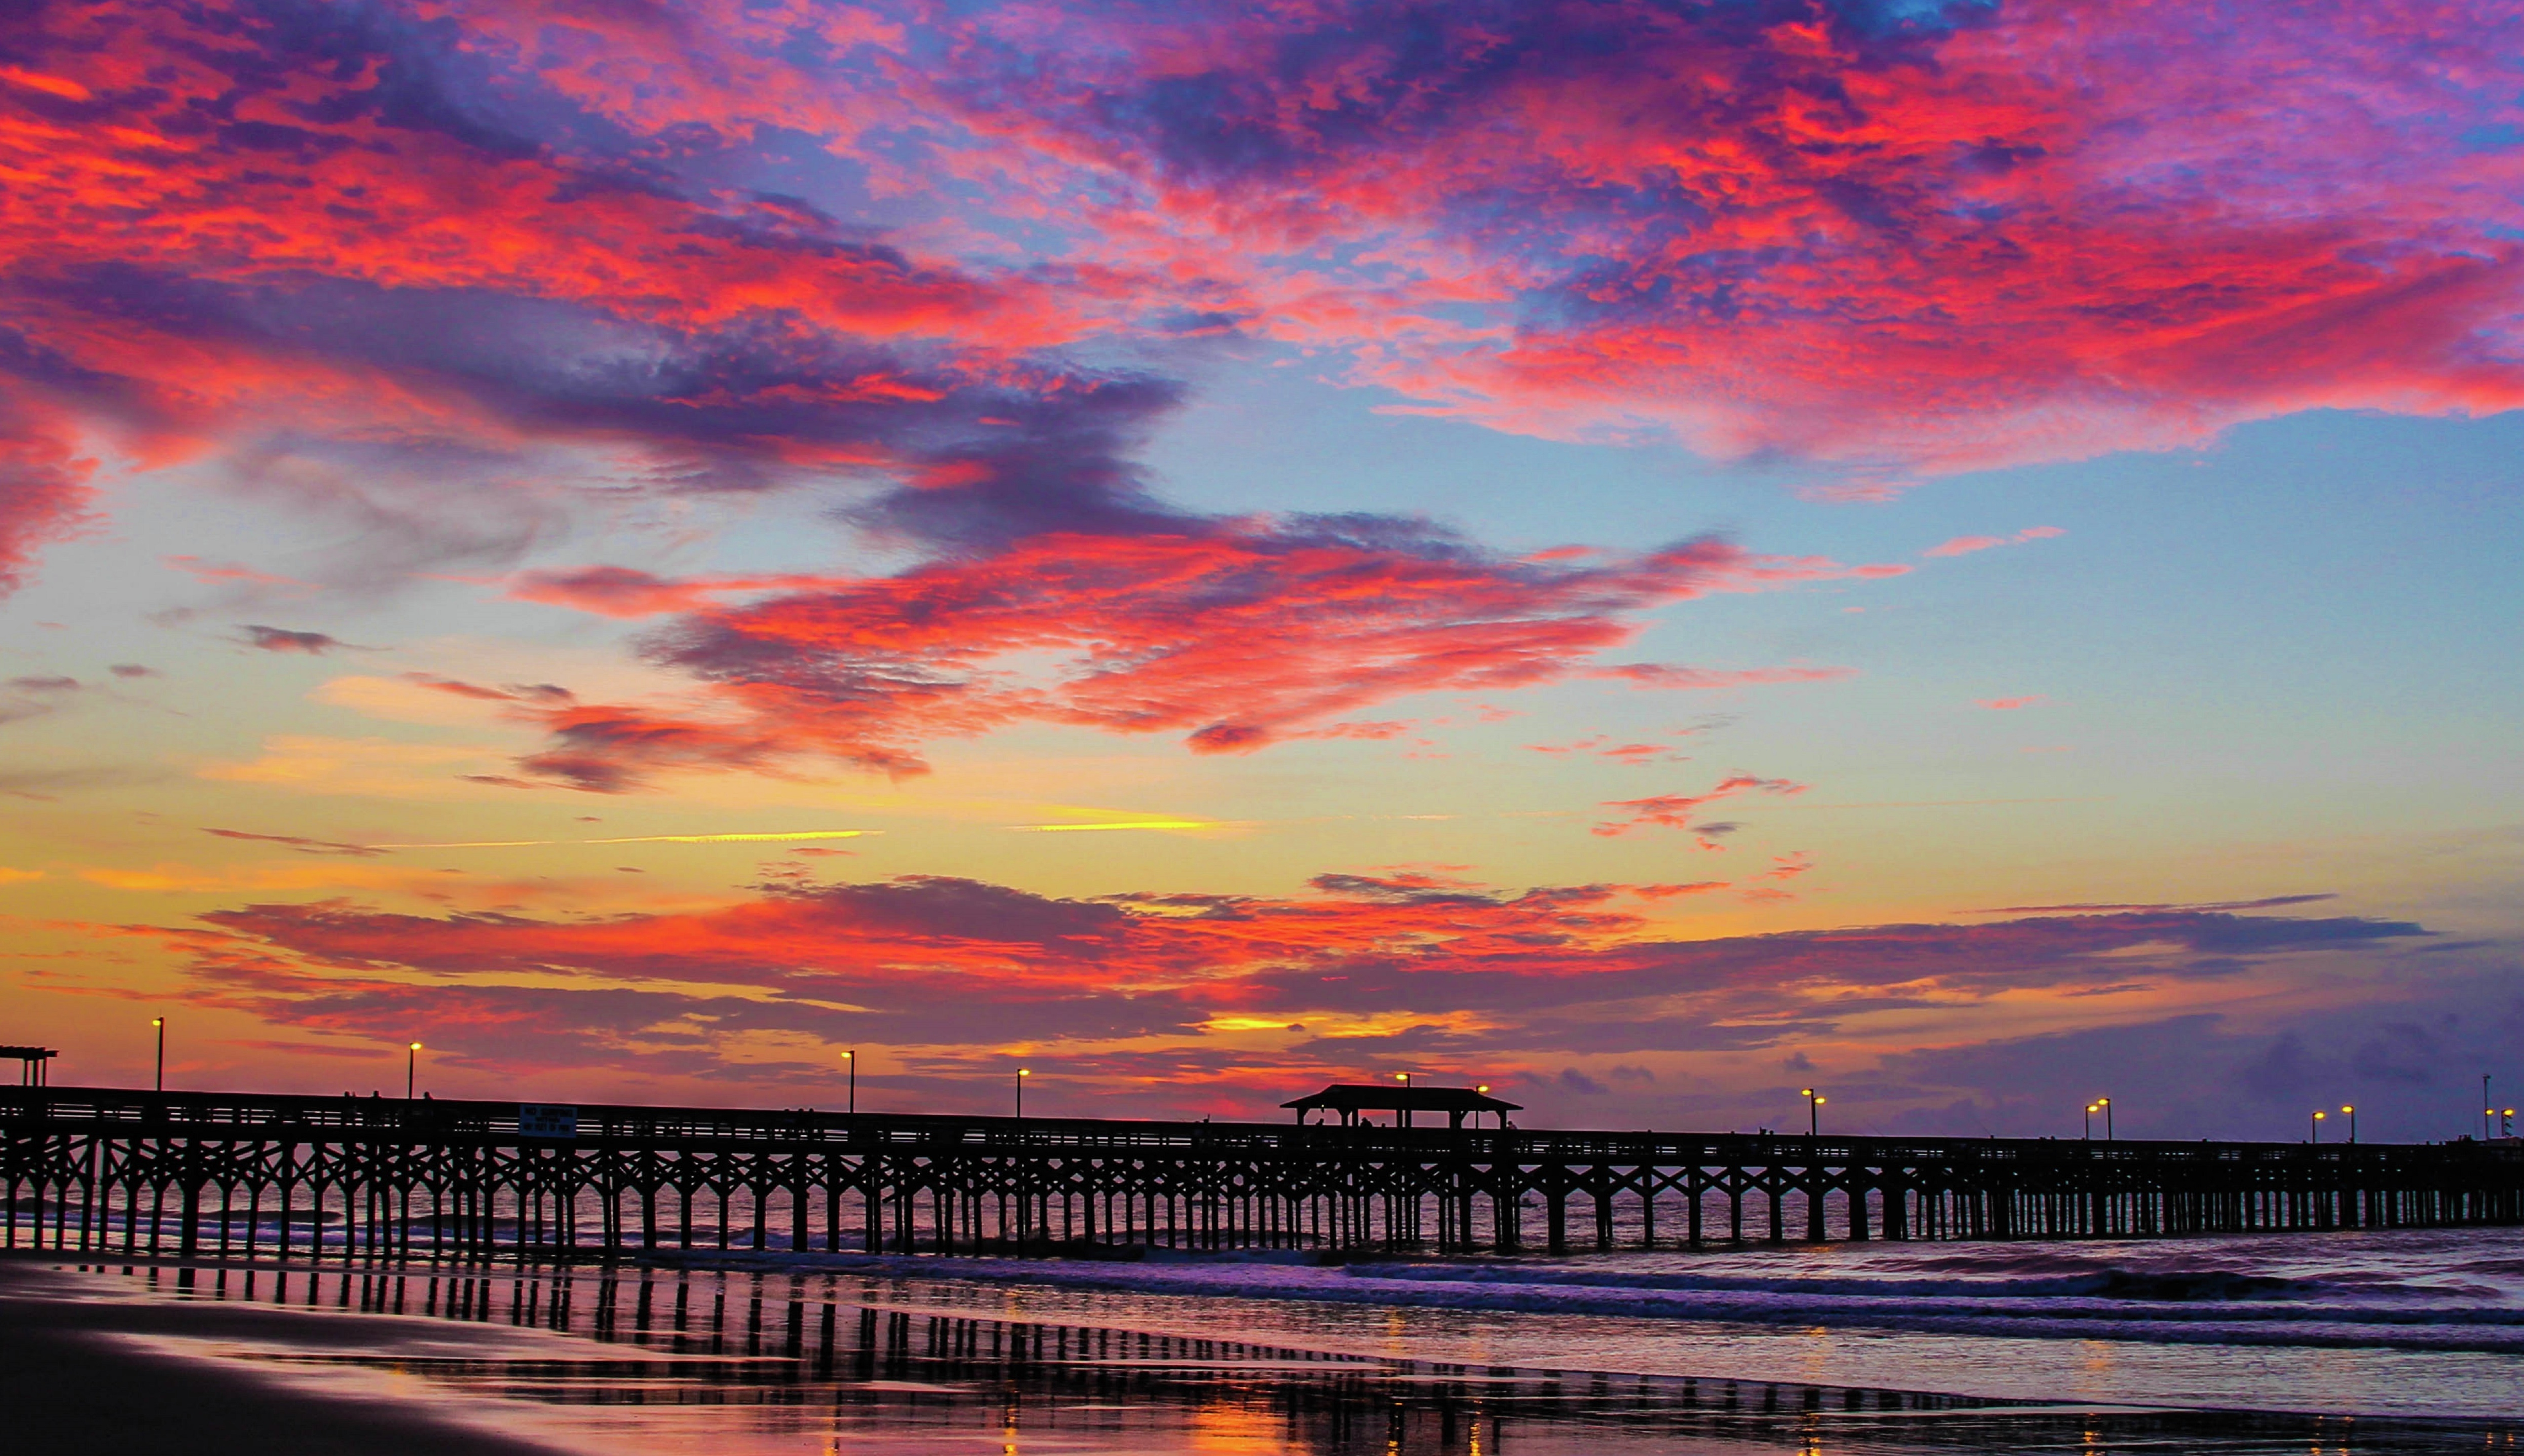 a pier on a beach at sunset